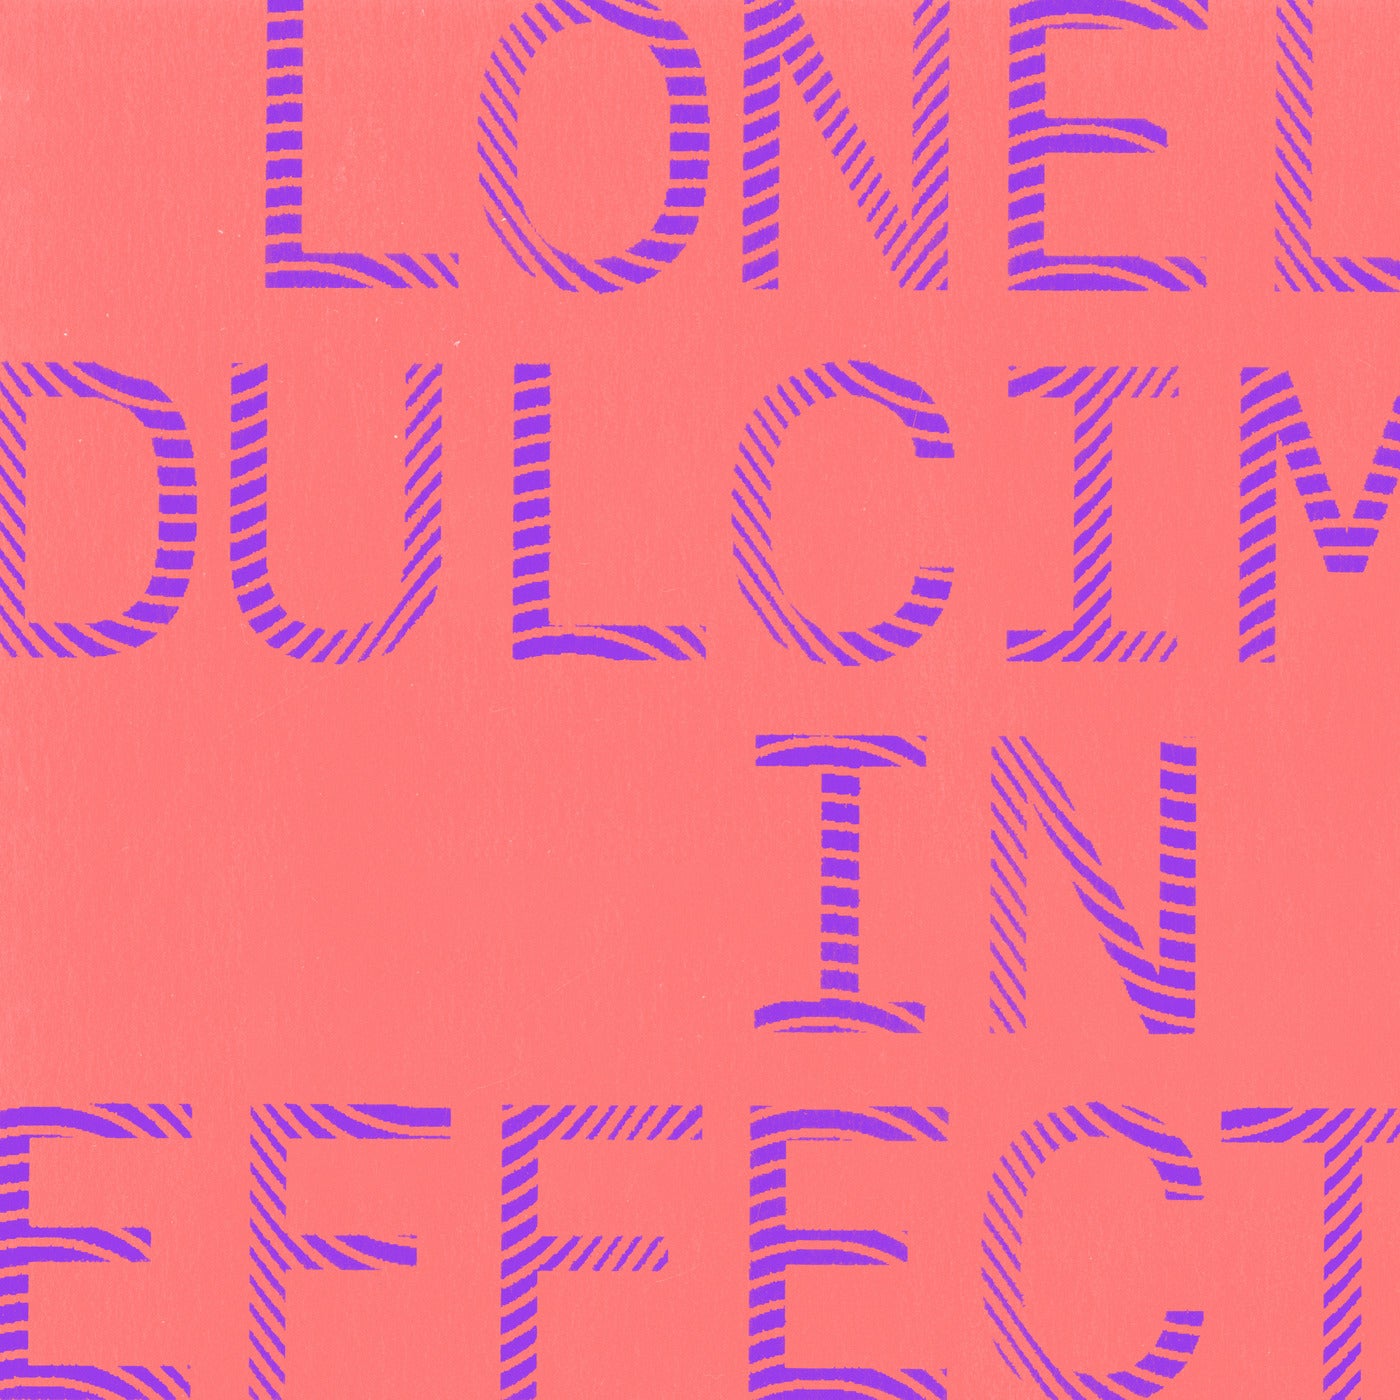 Dusky Lonely Dulcimer cover artwork